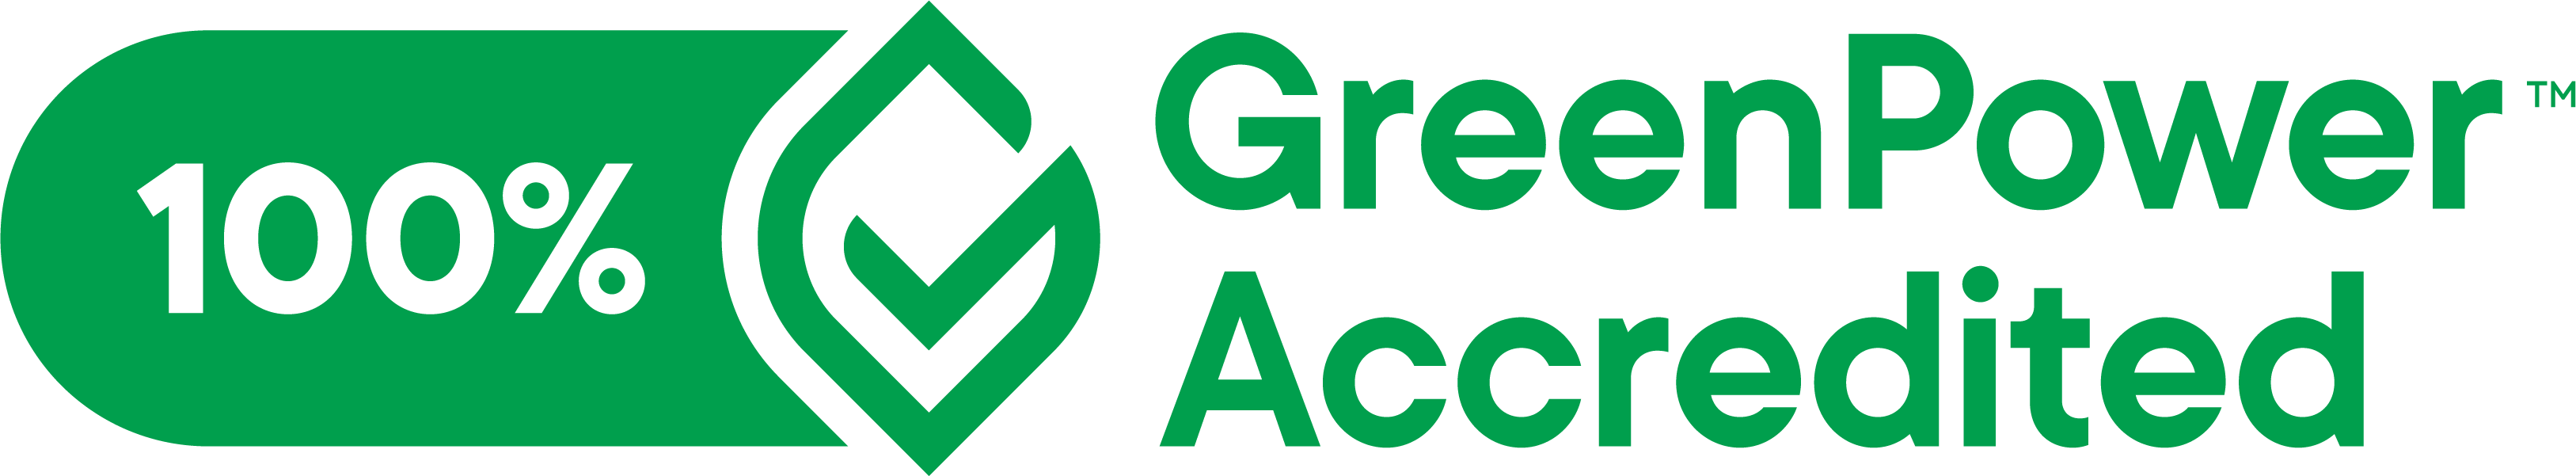 GreenPower 100% Accredited 